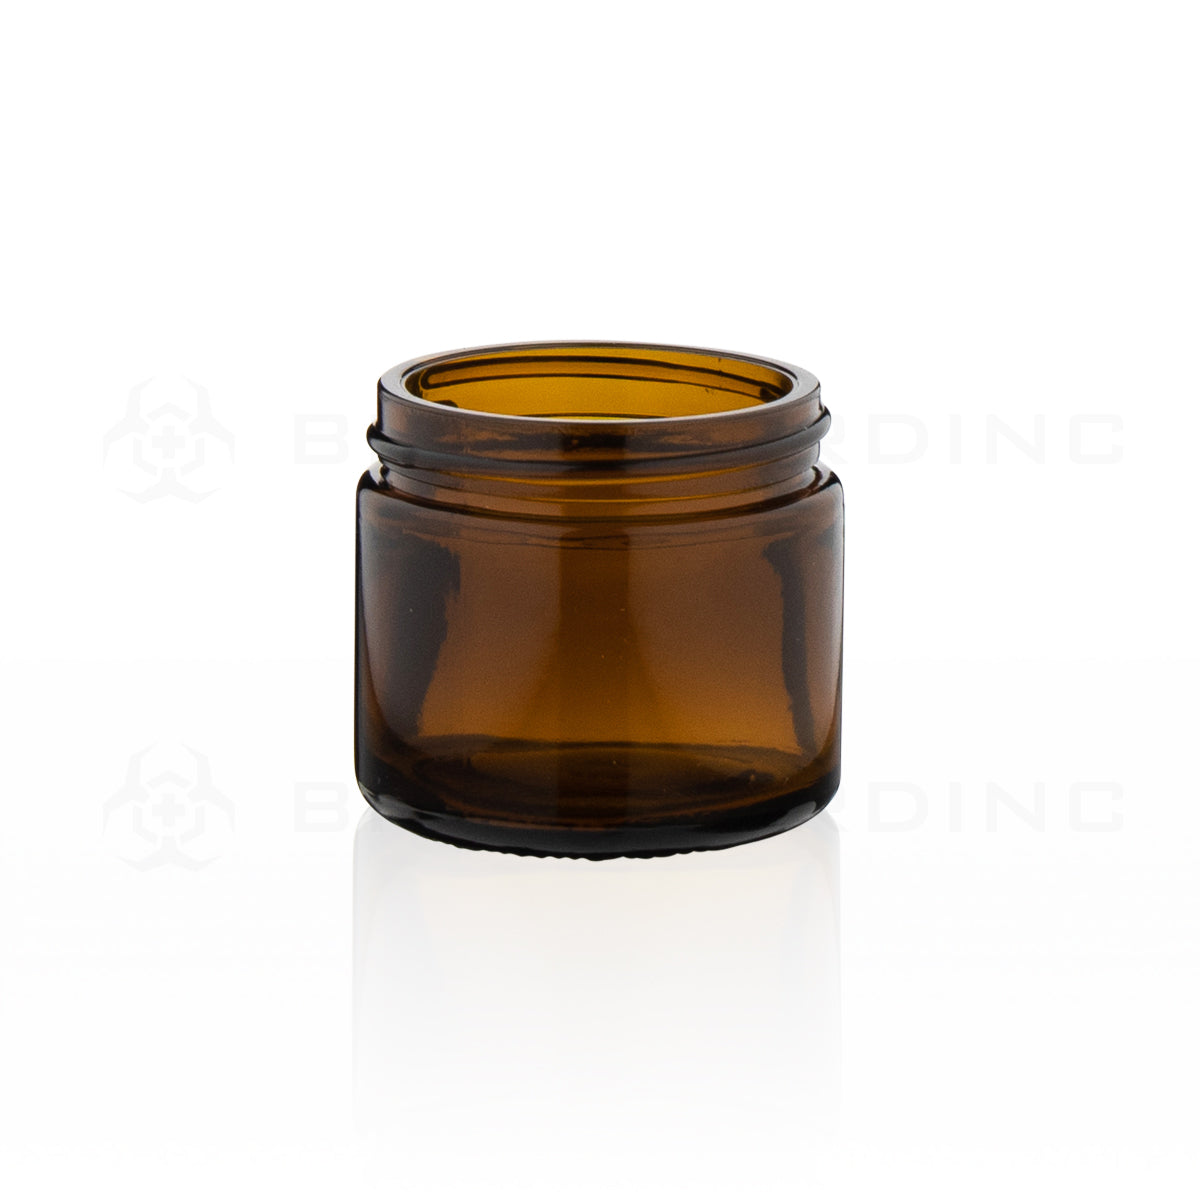 Glass Jar | Straight Sided Glass Jars - Amber | 53mm - 2oz - 24 Count Glass Jar Biohazard Inc   